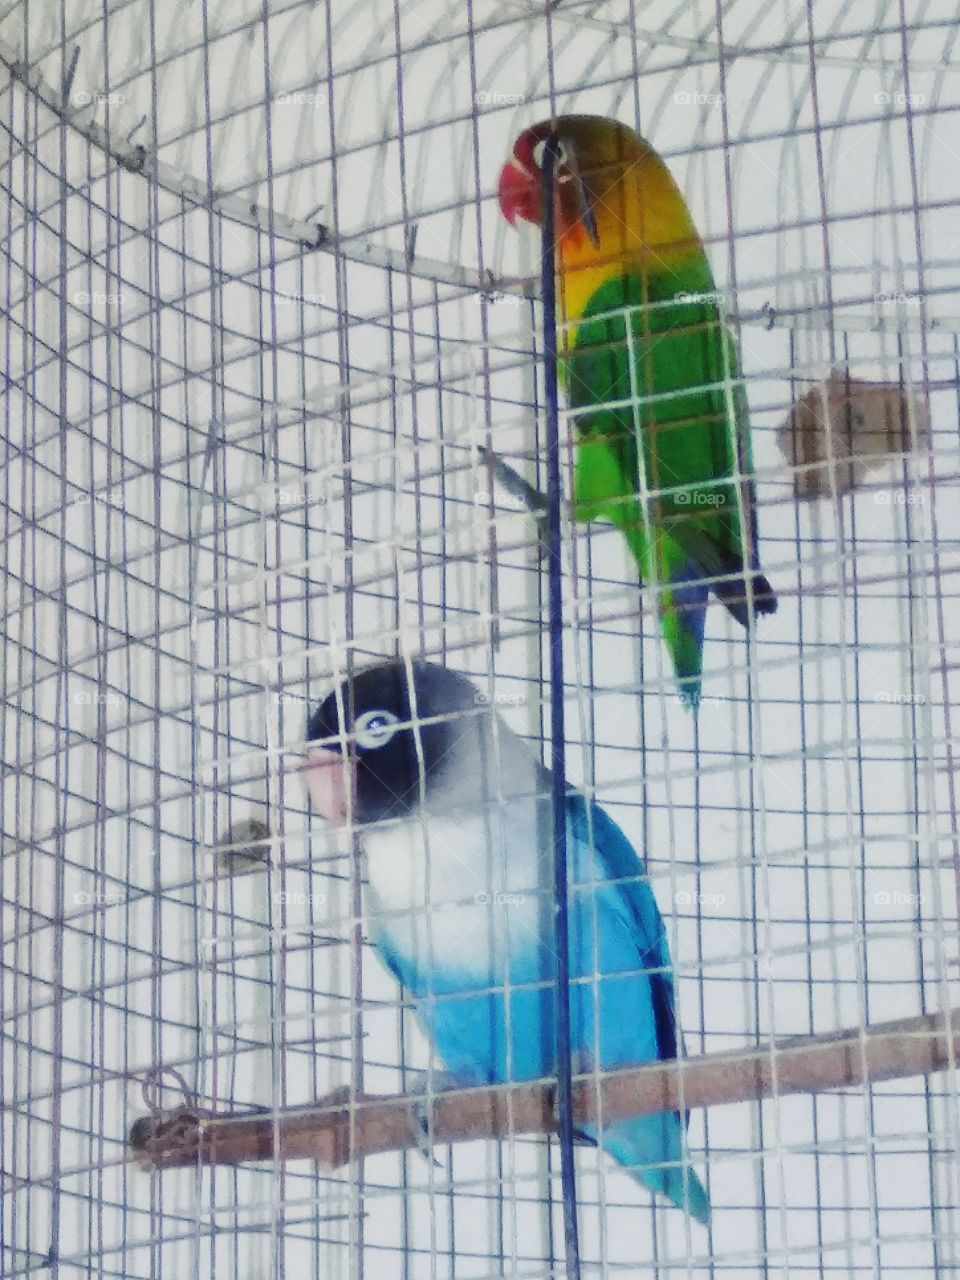 A pair of love birds